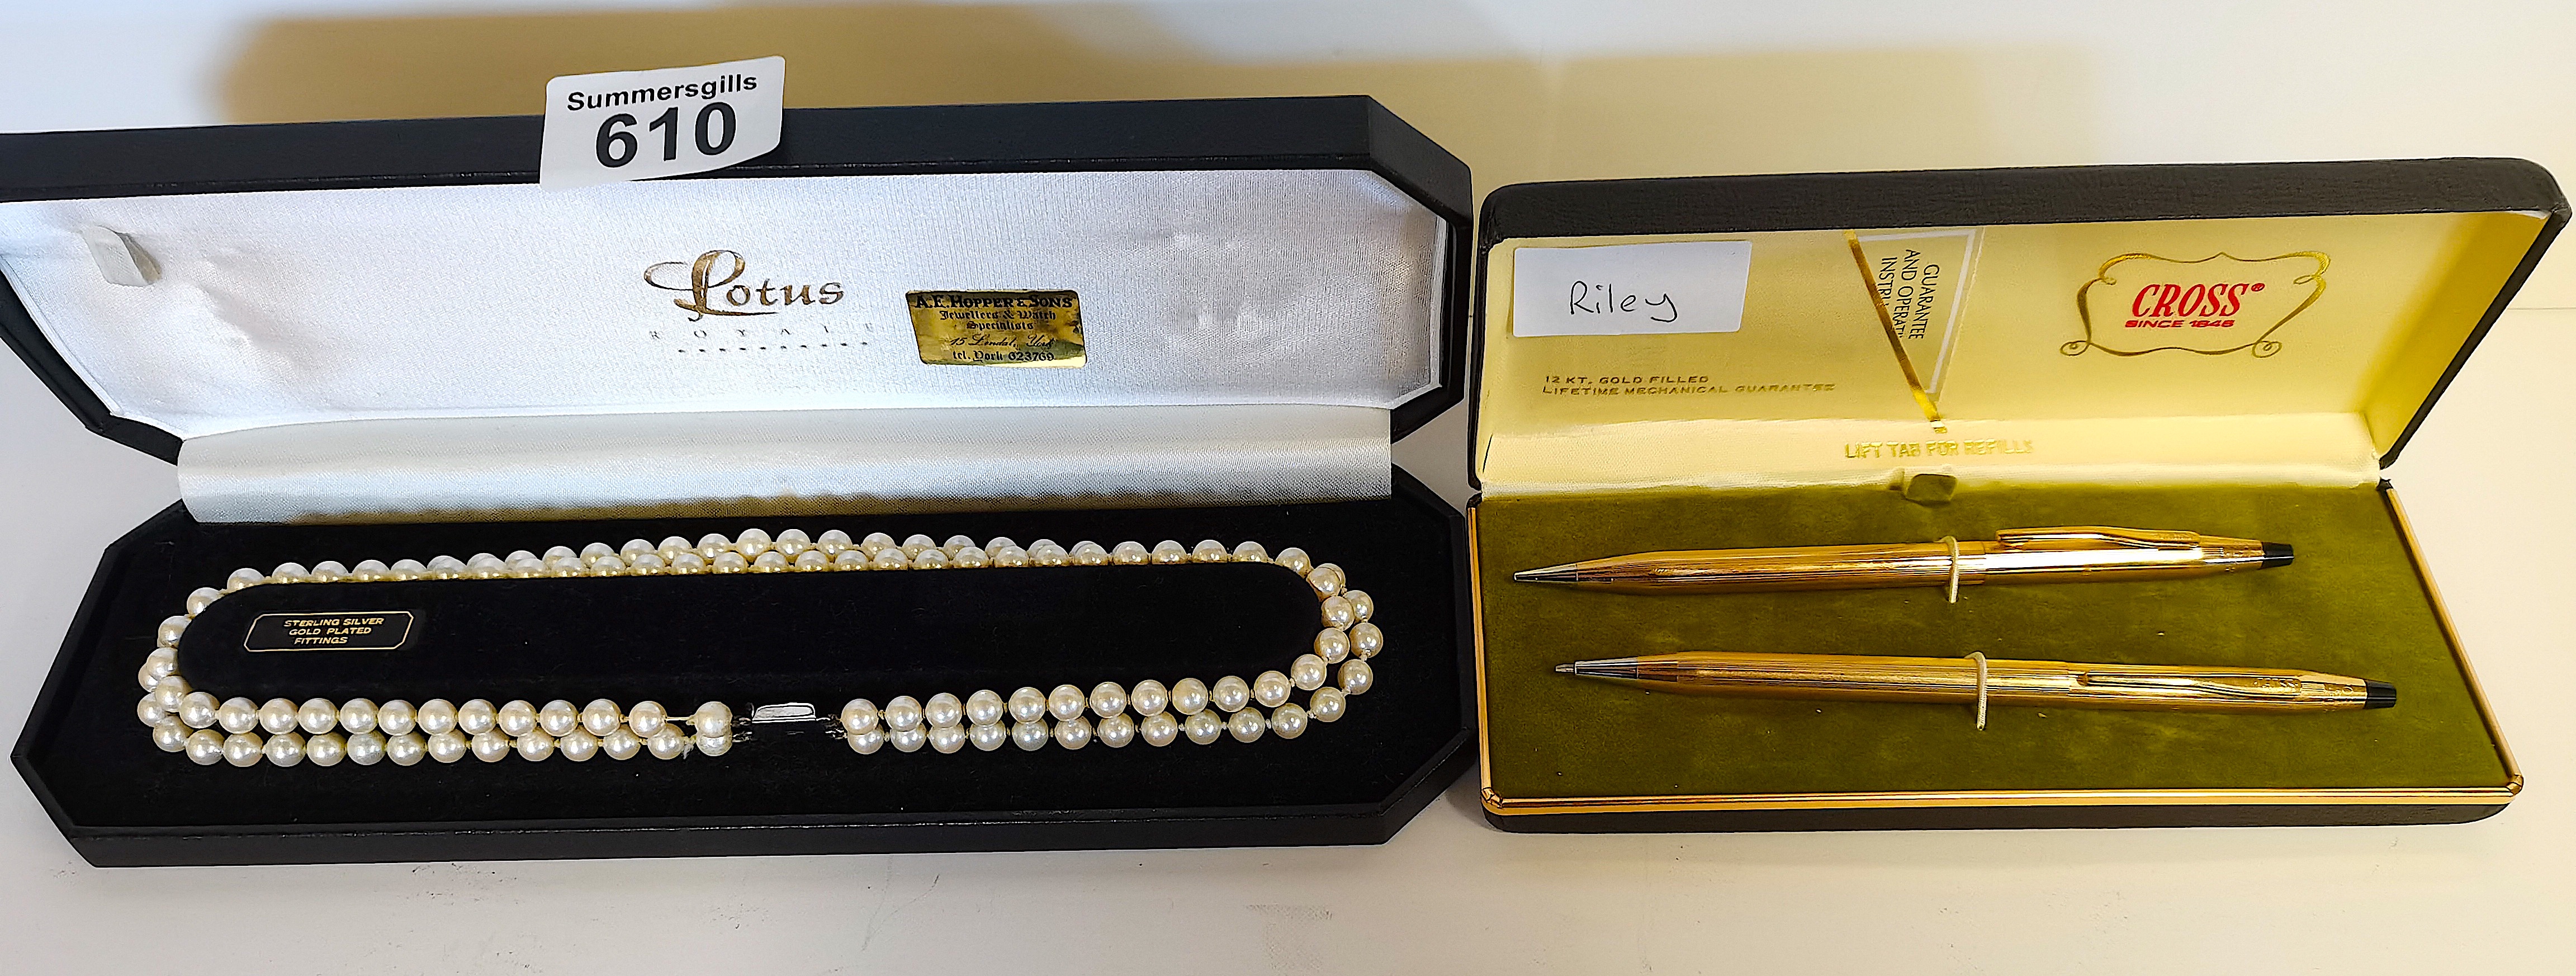 Lotus pearls plus 2 x 12ct gold cross pens in case